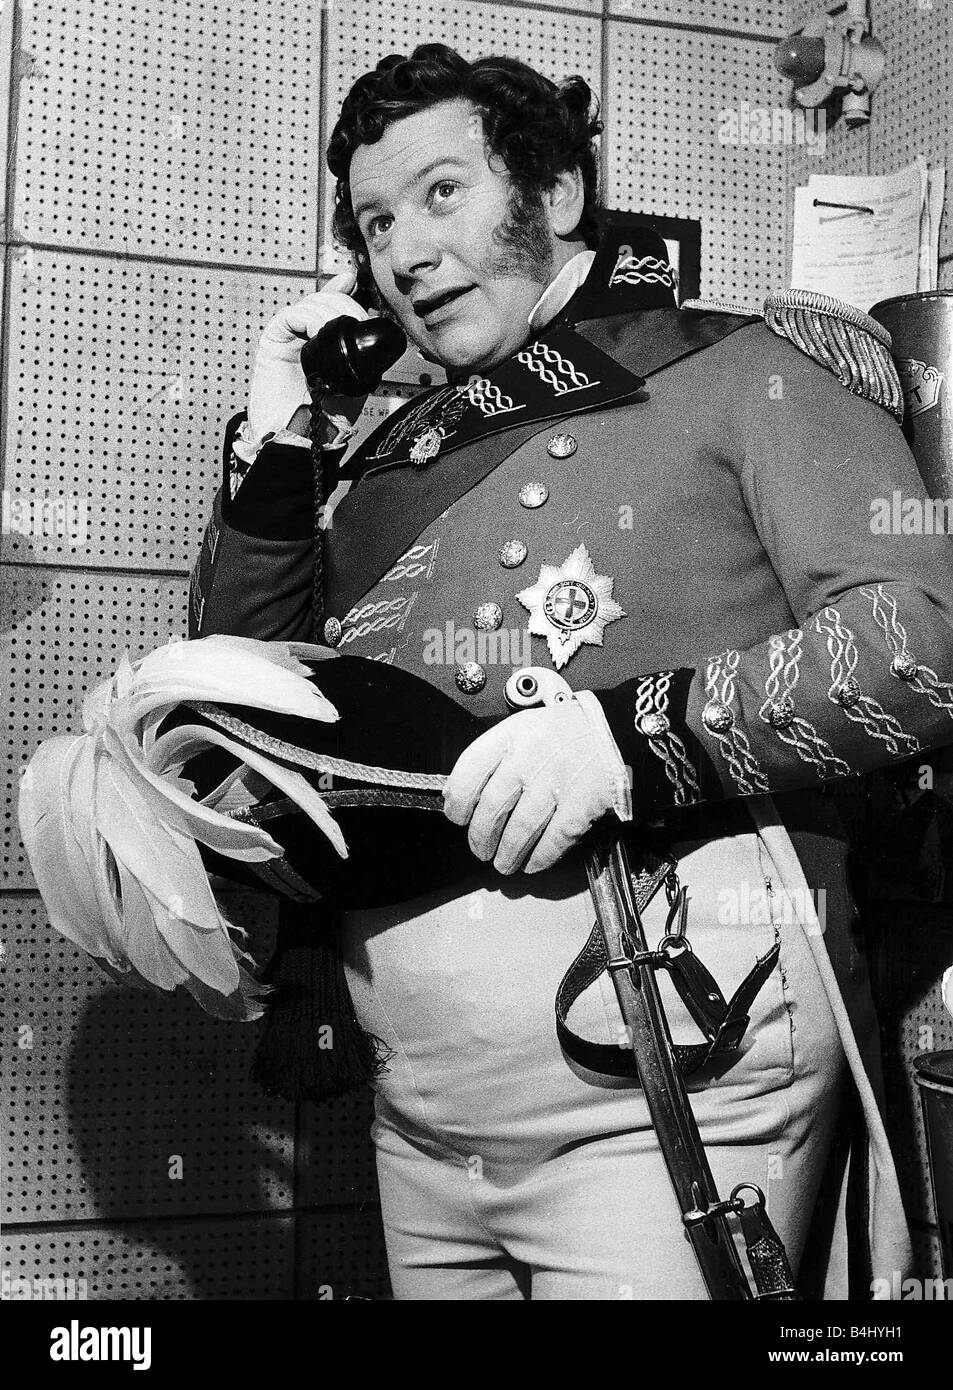 Peter Ustinov as King George IV at elstree film studio February 1954 Stock Photo